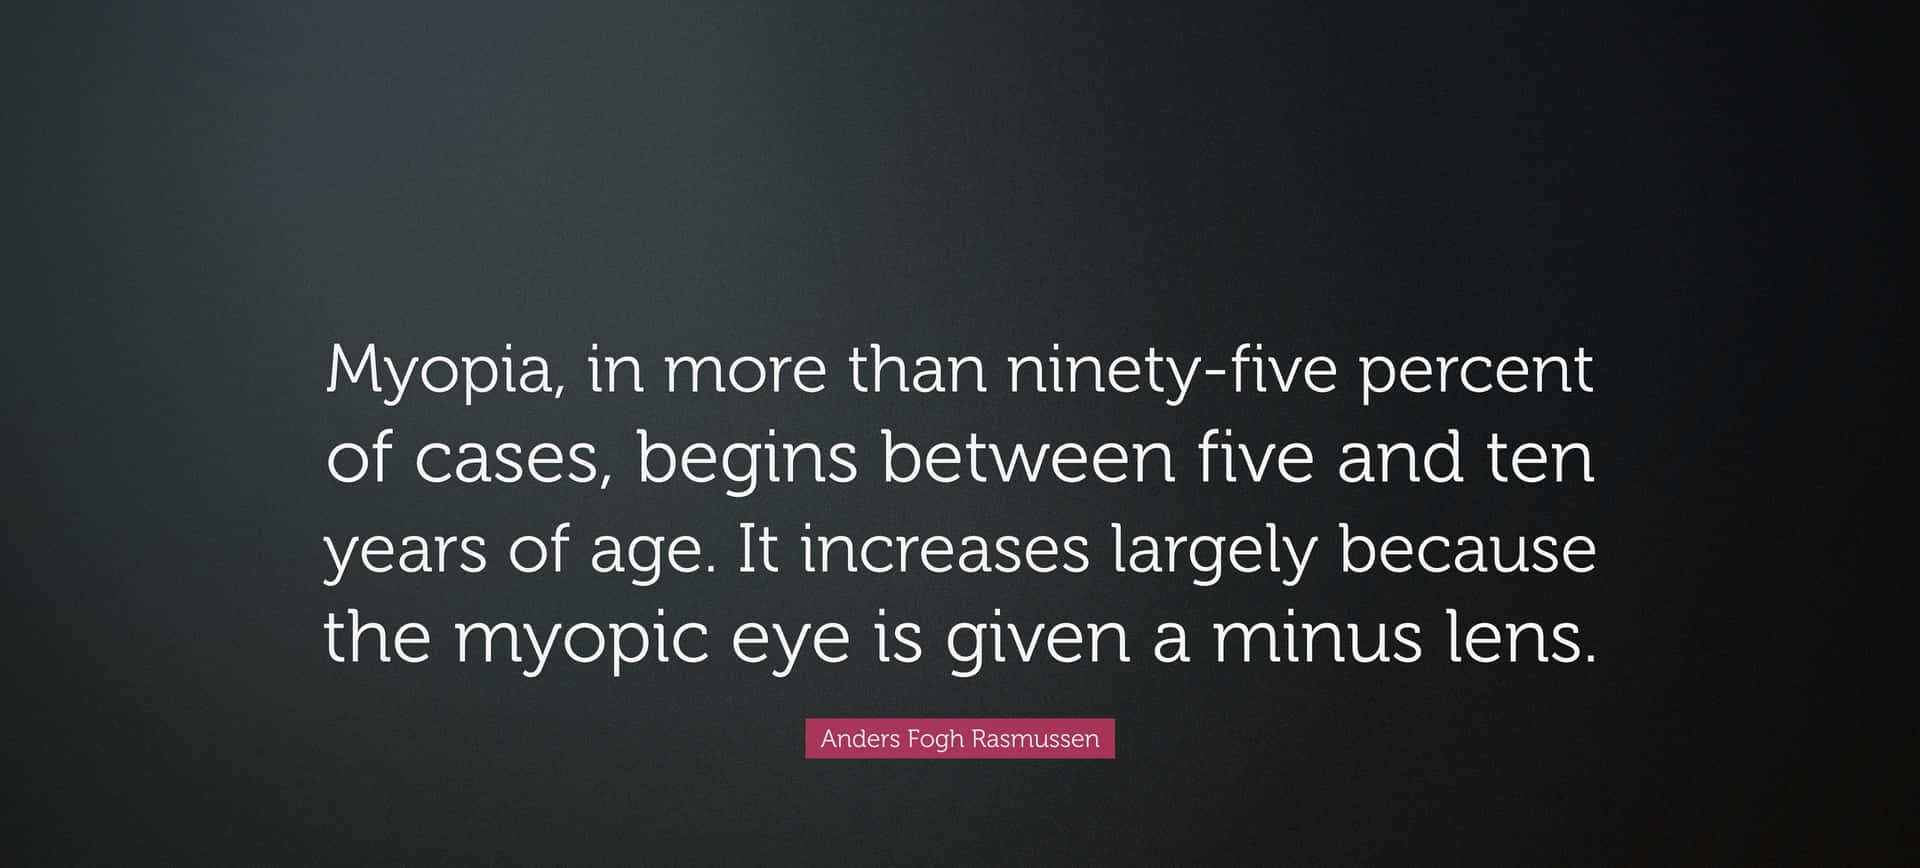 Myopic Eye Quote Wallpaper